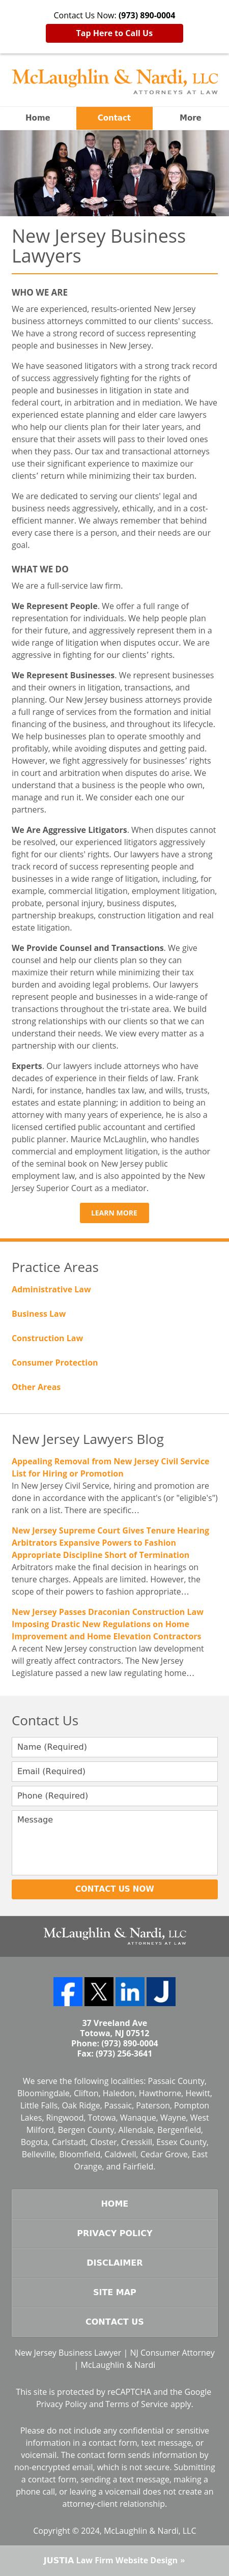 McLaughlin & Nardi, LLC - Totowa NJ Lawyers